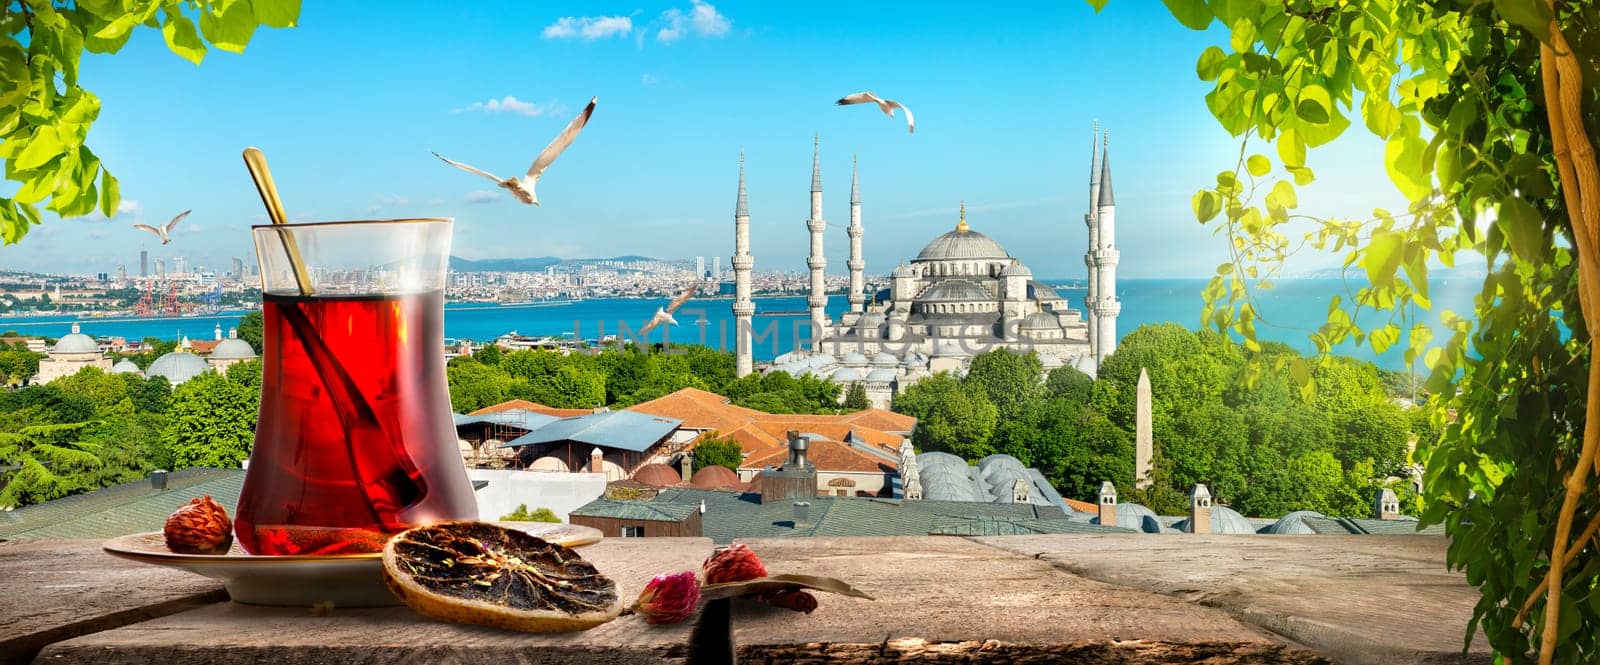 Turkish tea in Istanbul by Givaga